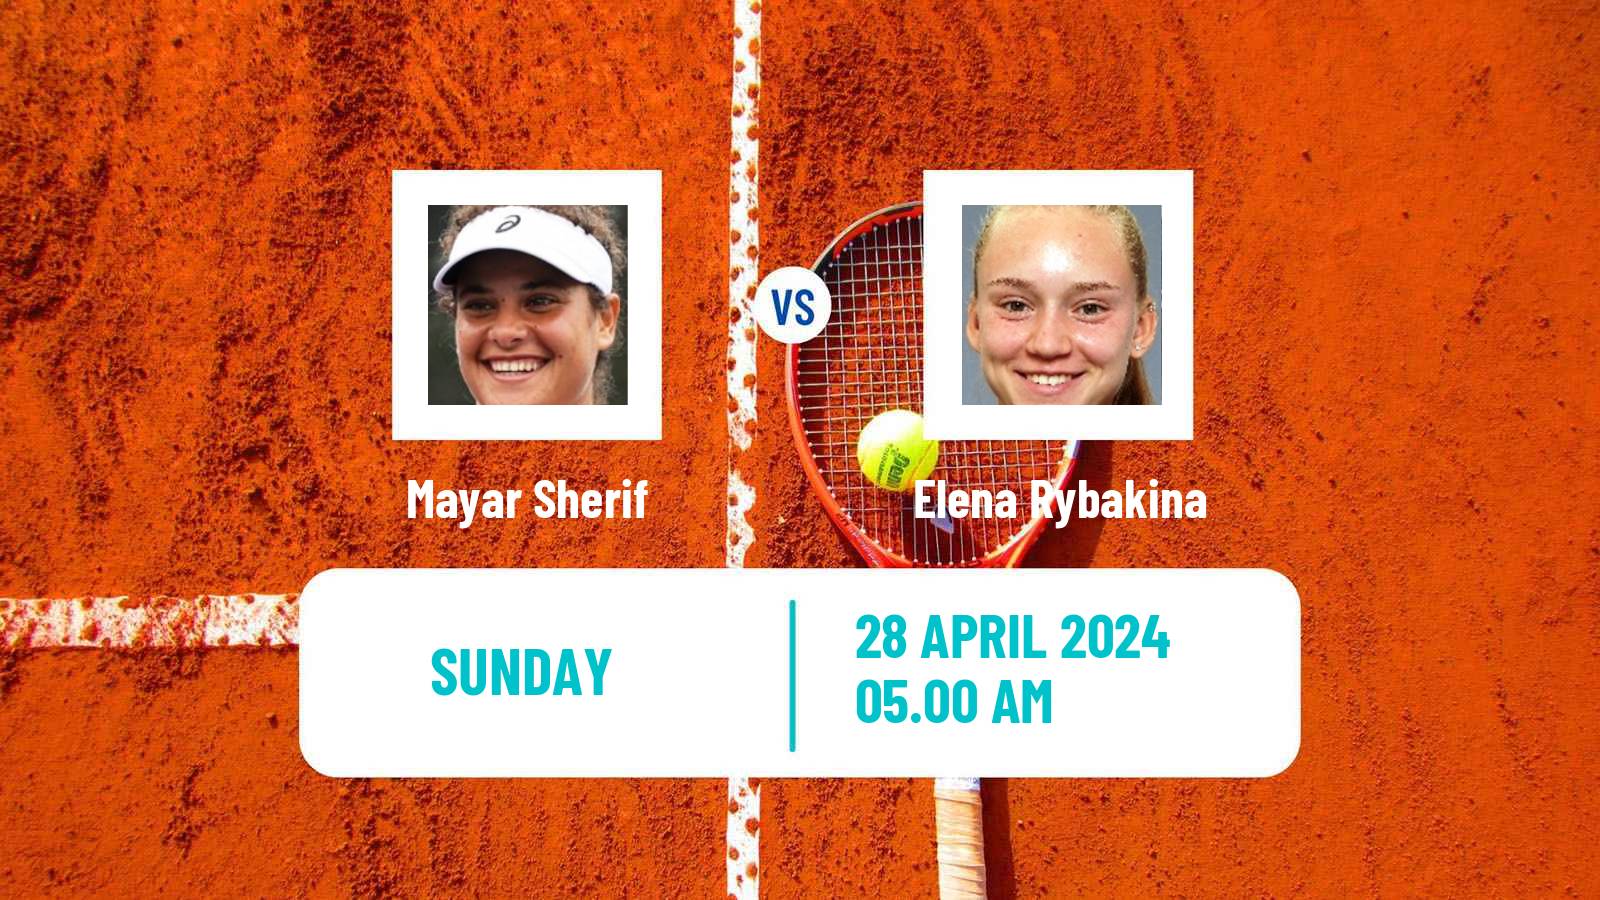 Tennis WTA Madrid Mayar Sherif - Elena Rybakina